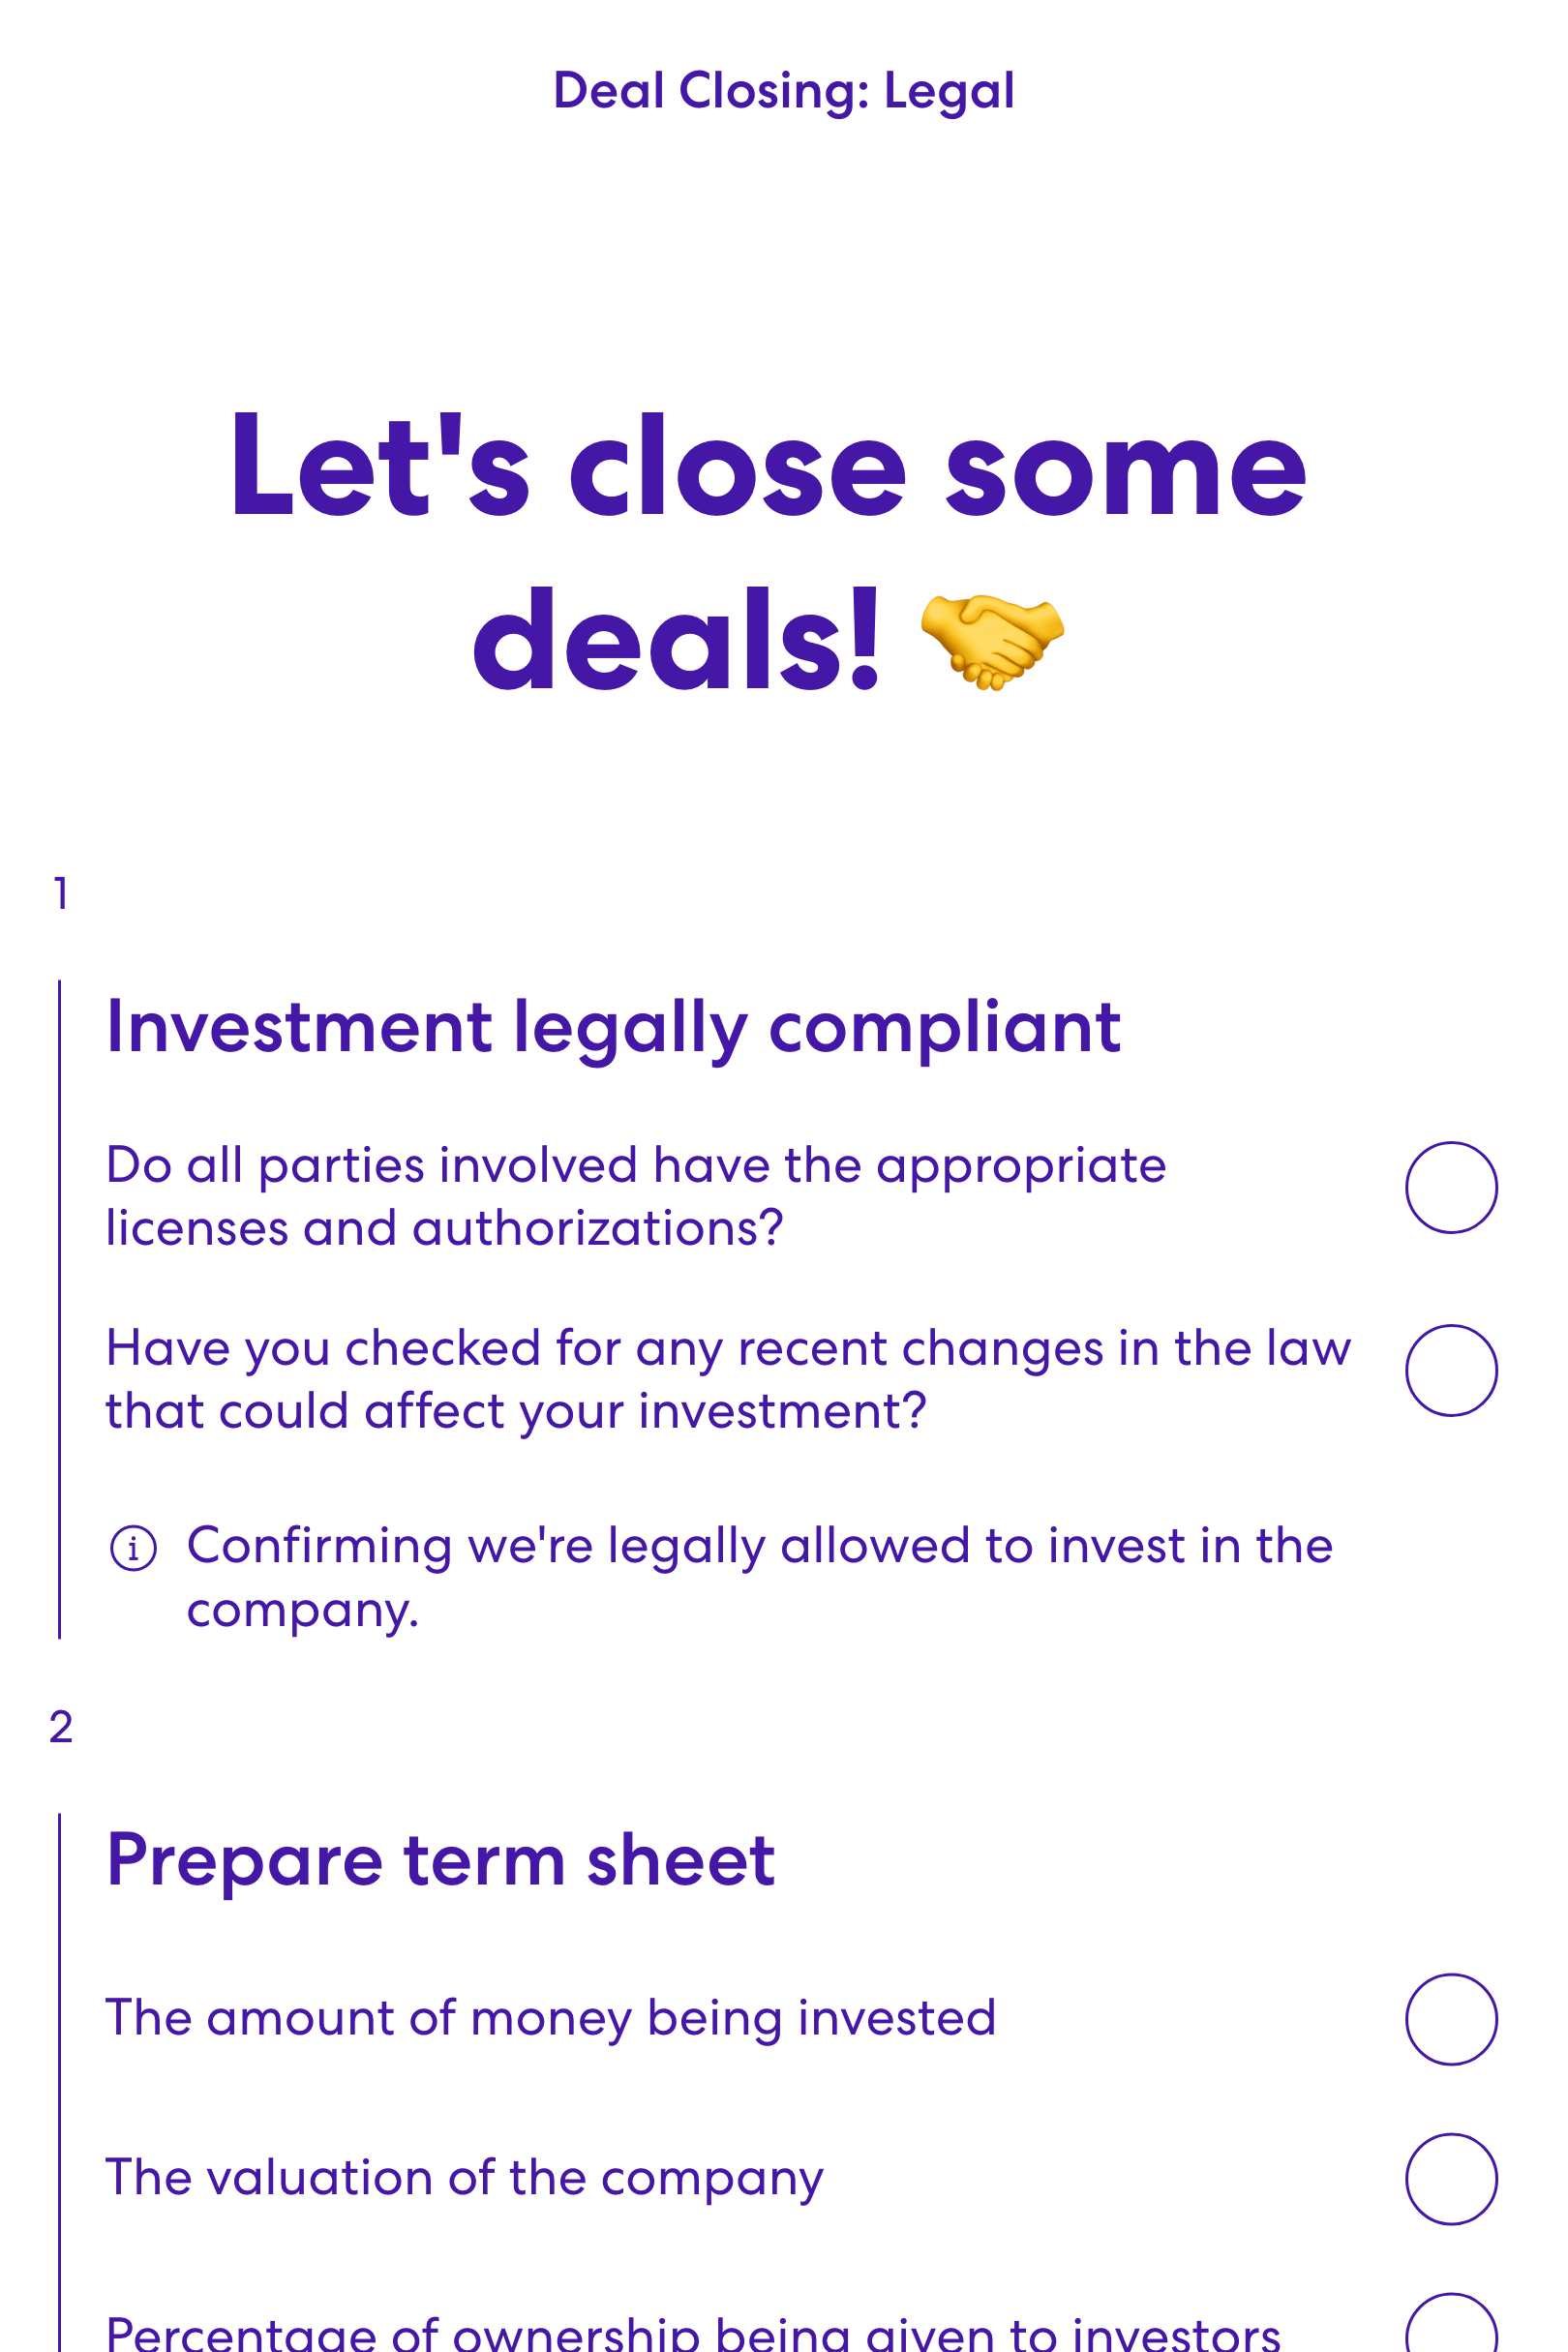 Screenshot of Deal Closing: Legal template